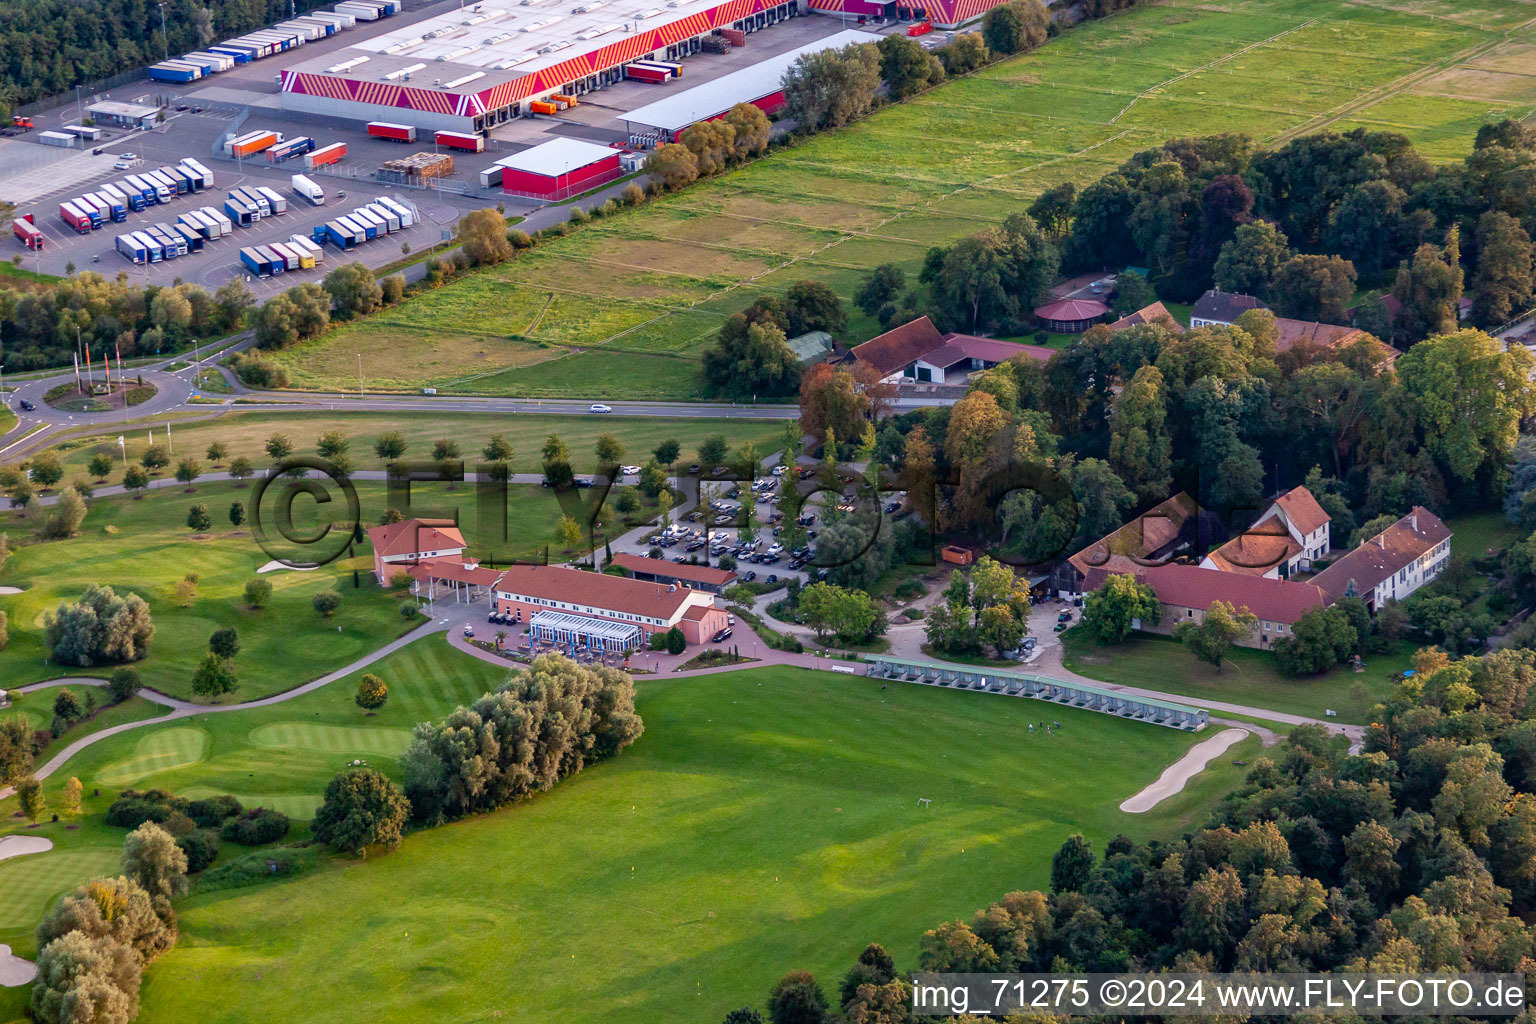 Golf course at Landgut Dreihof in Essingen in the state Rhineland-Palatinate, Germany